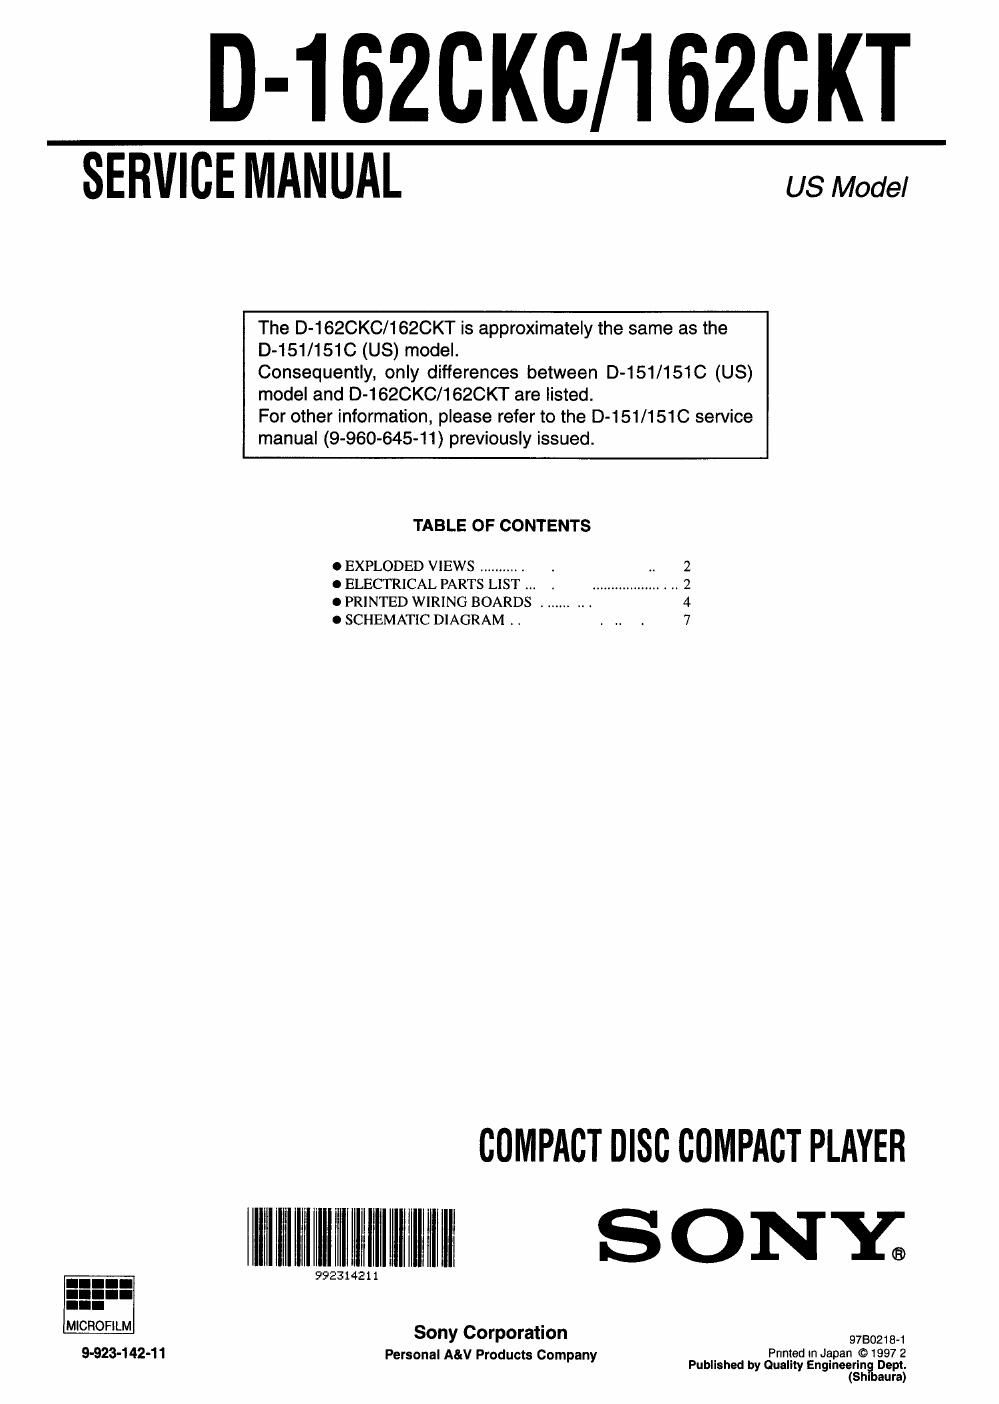 sony d 162 ckc service manual